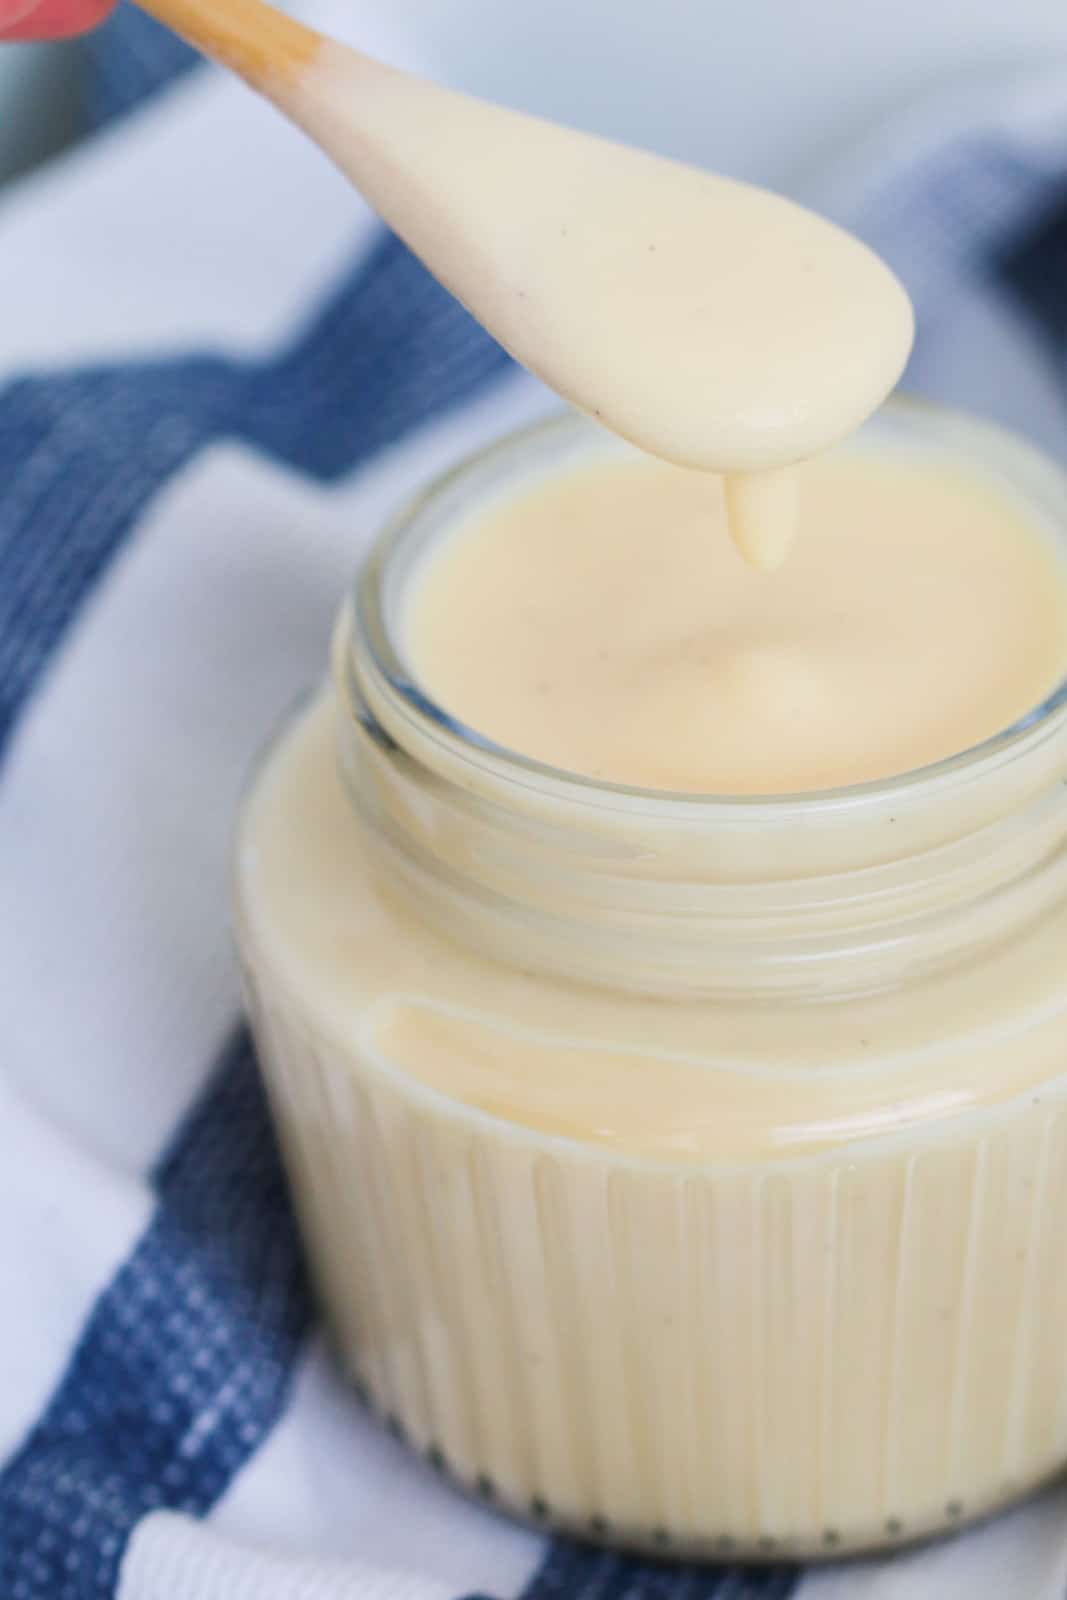 Creamy custard dripping off a wooden spoon into a glass jar of vanilla custard.